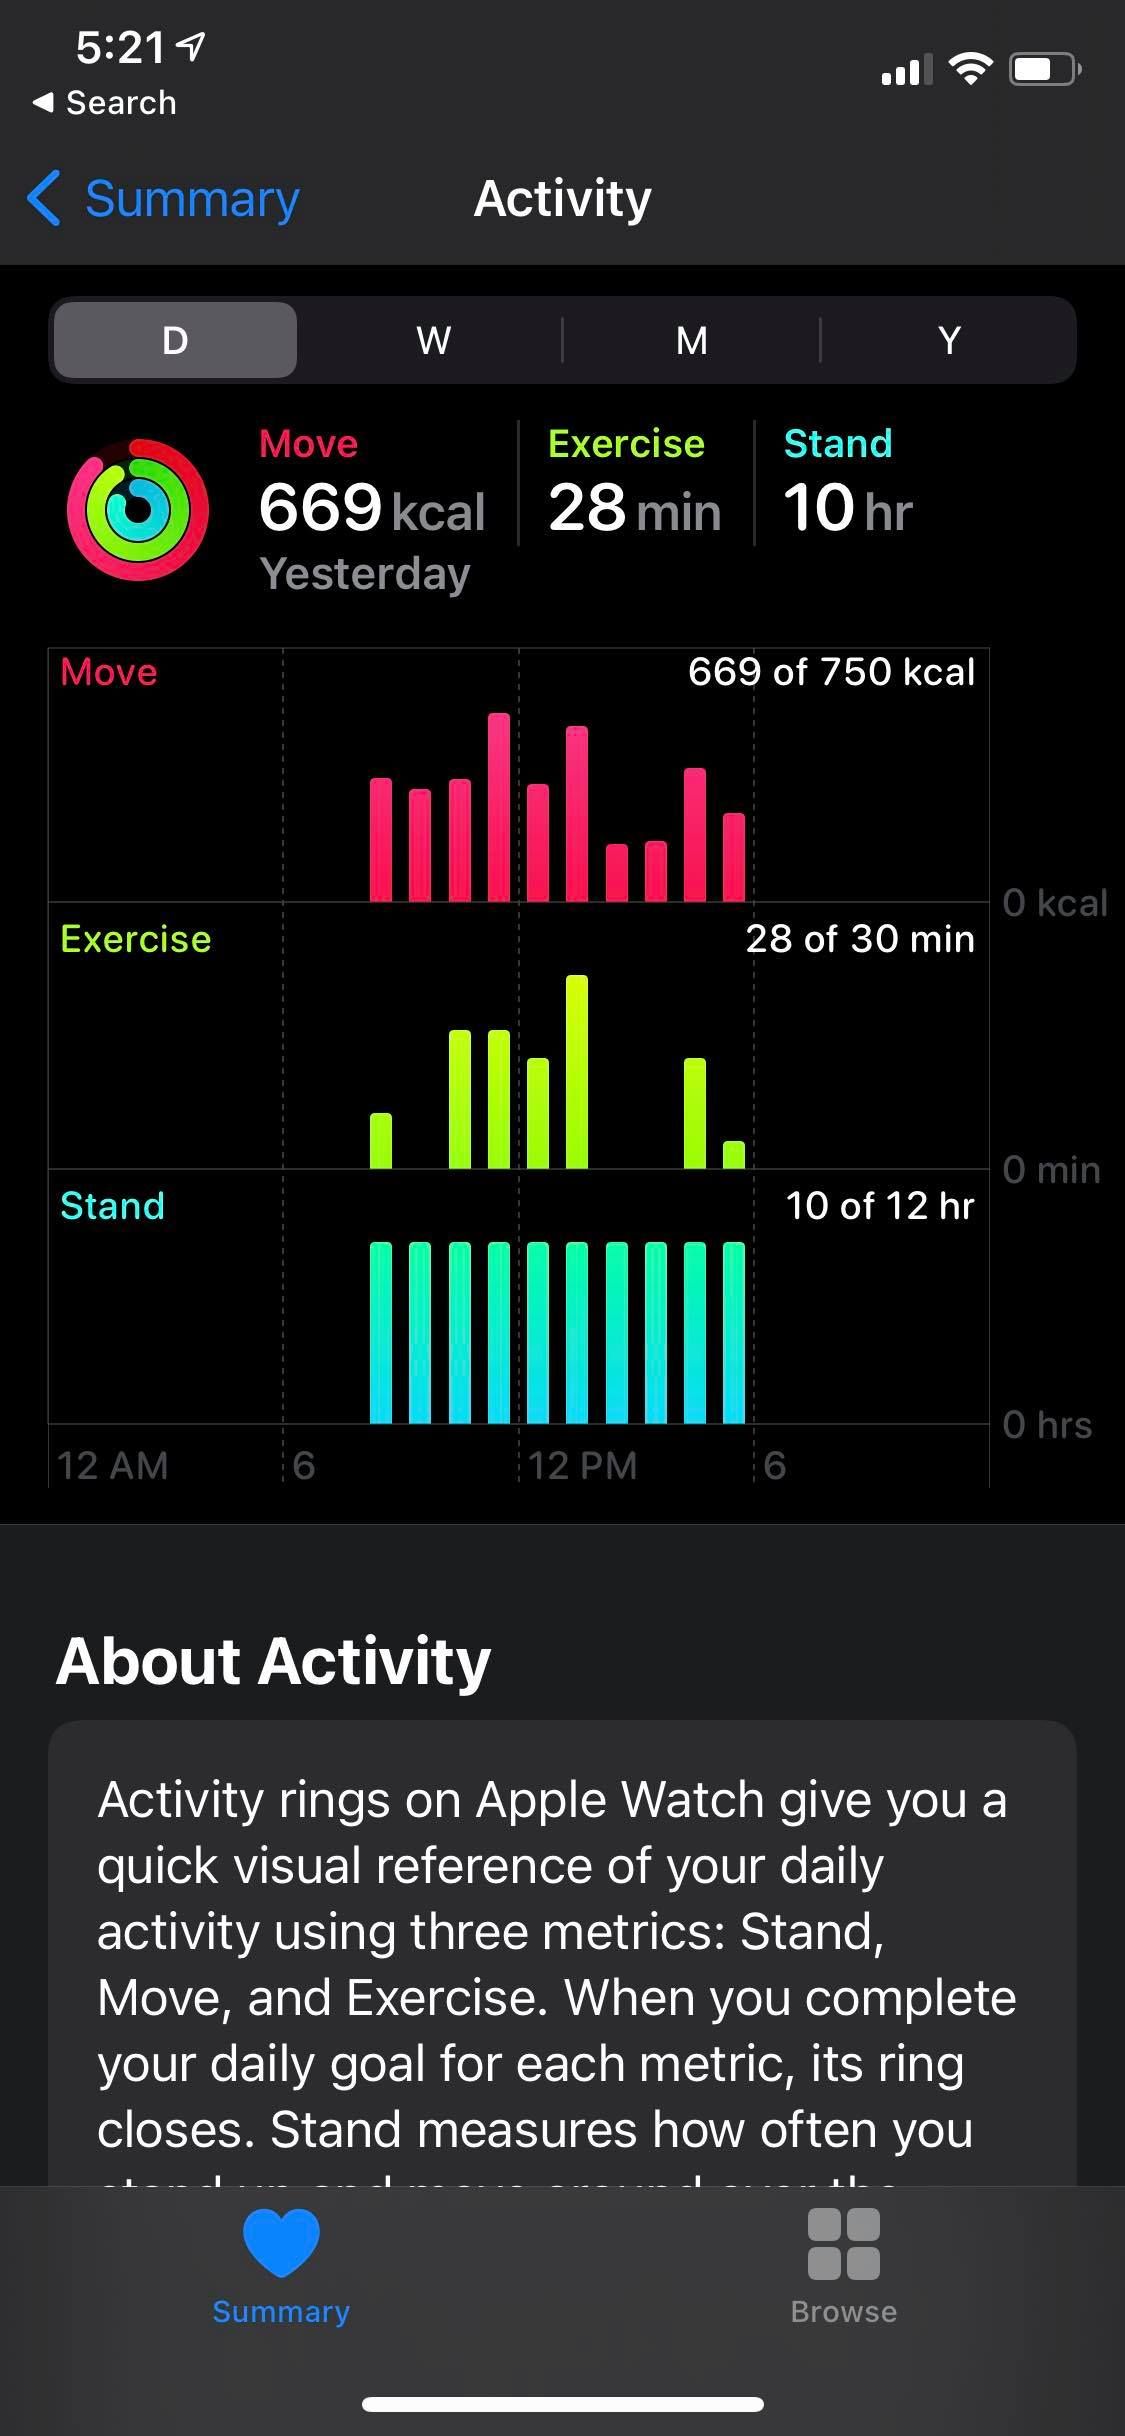 iPhone Health App Screenshot showing Activity charts